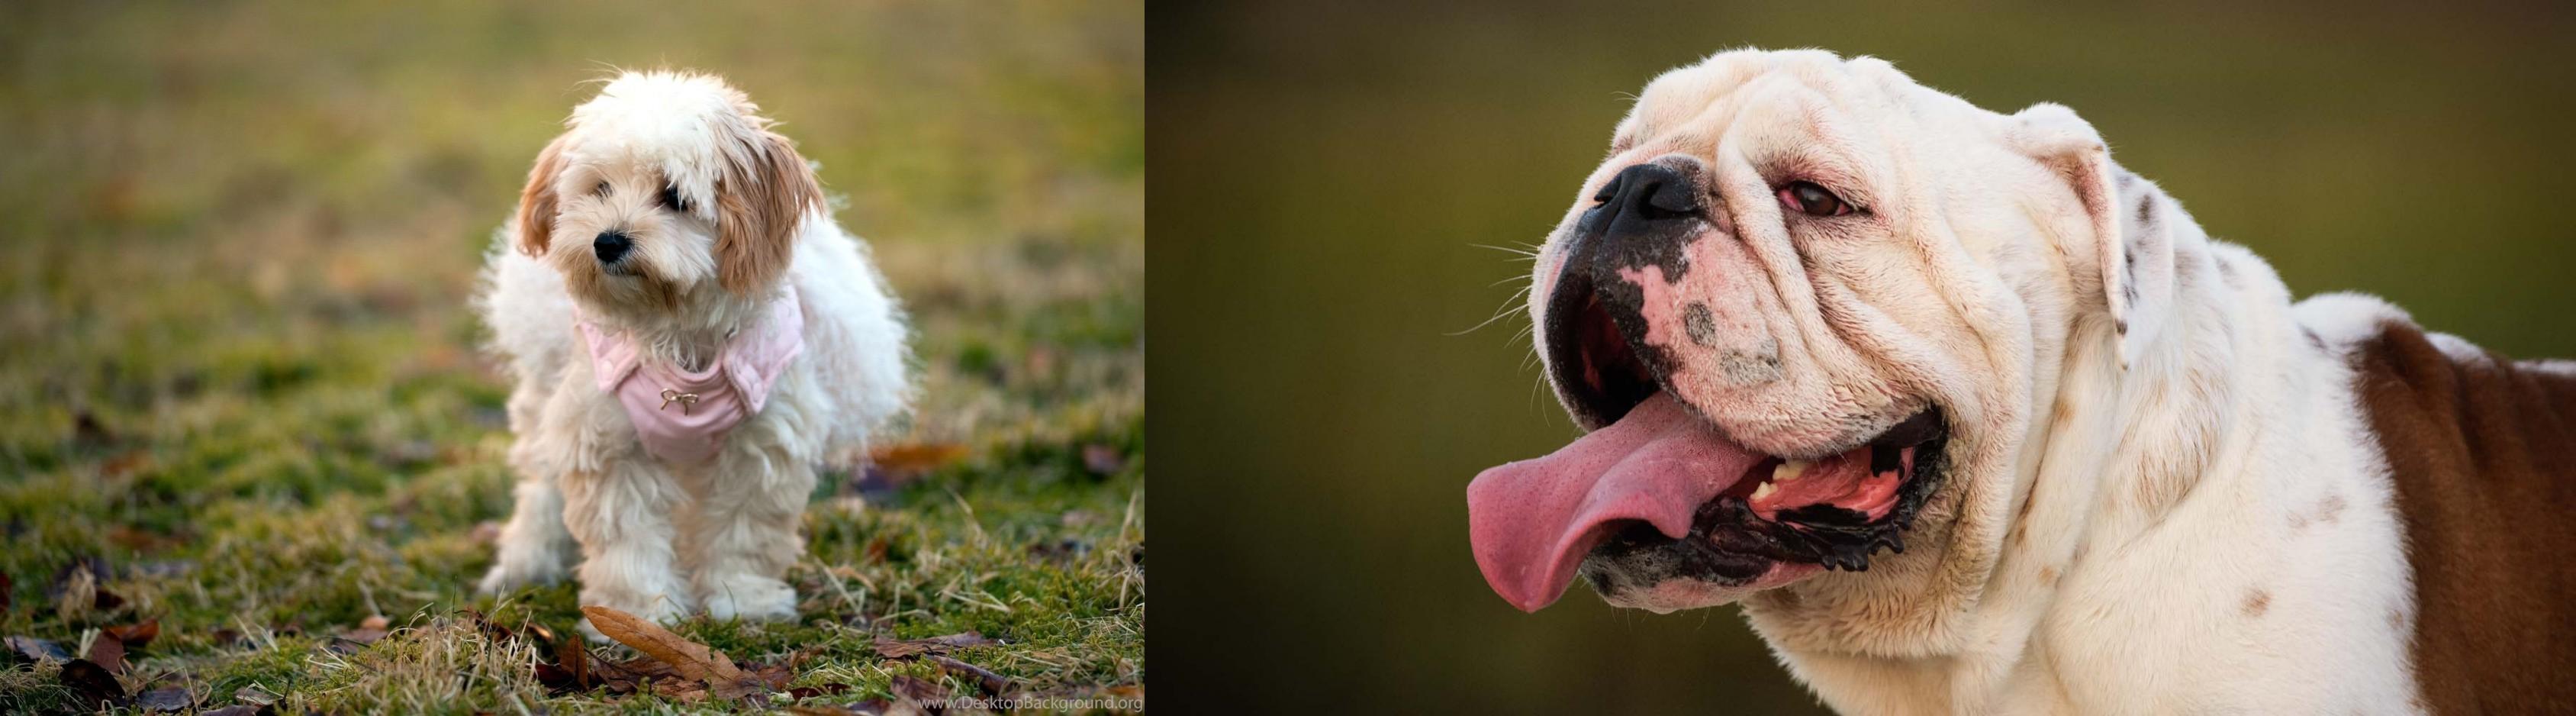 West Highland White Terrier Vs English Bulldog Breed Comparison